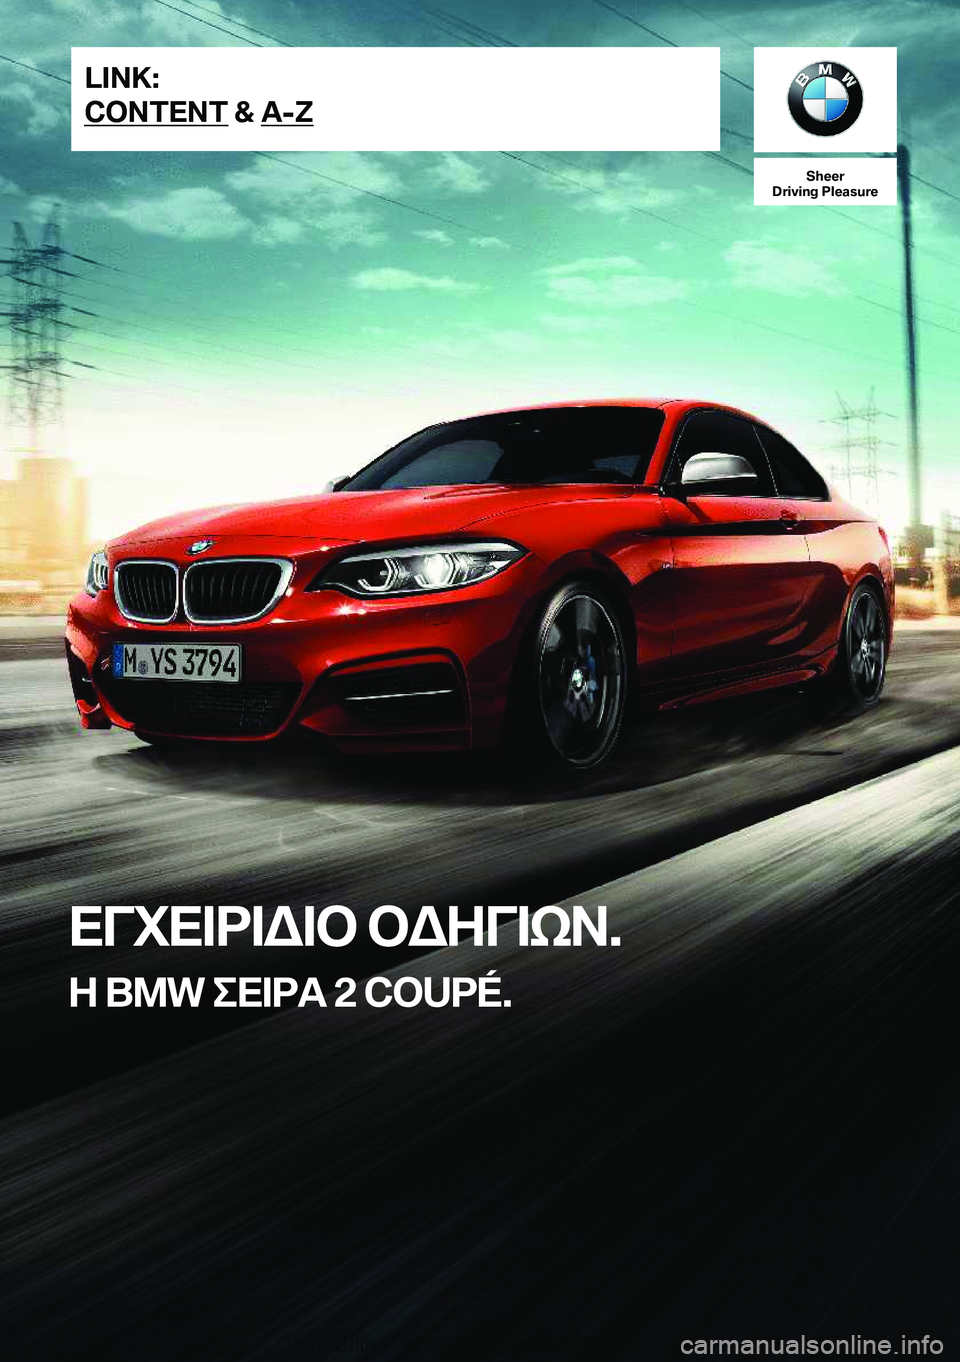 BMW 2 SERIES COUPE 2019  ΟΔΗΓΌΣ ΧΡΉΣΗΣ (in Greek) �S�h�e�e�r
�D�r�i�v�i�n�g��P�l�e�a�s�u�r�e
XViX=d=W=b�bWZV=kA�.
Z��B�M�W�eX=dT��2��C�O�U�P�